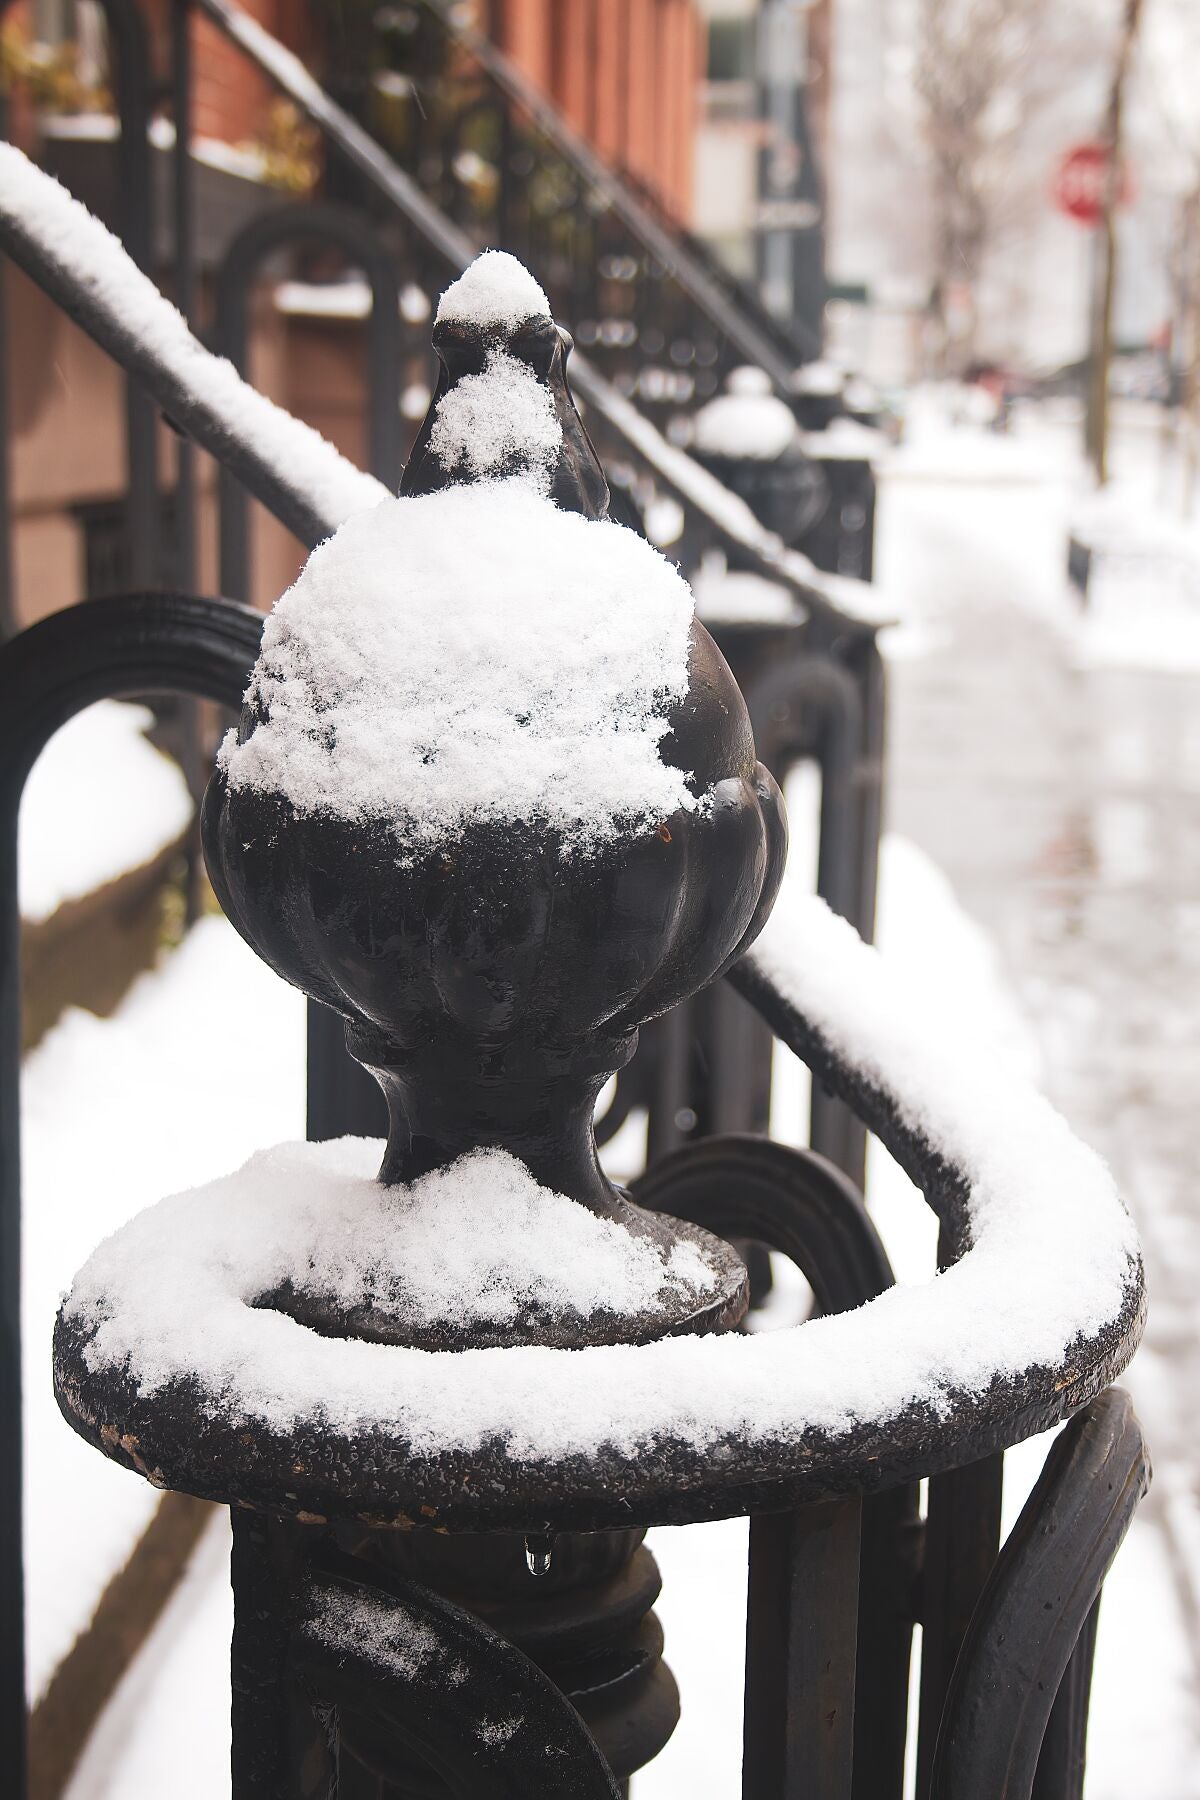 Brooklyn stoop detail under the snow